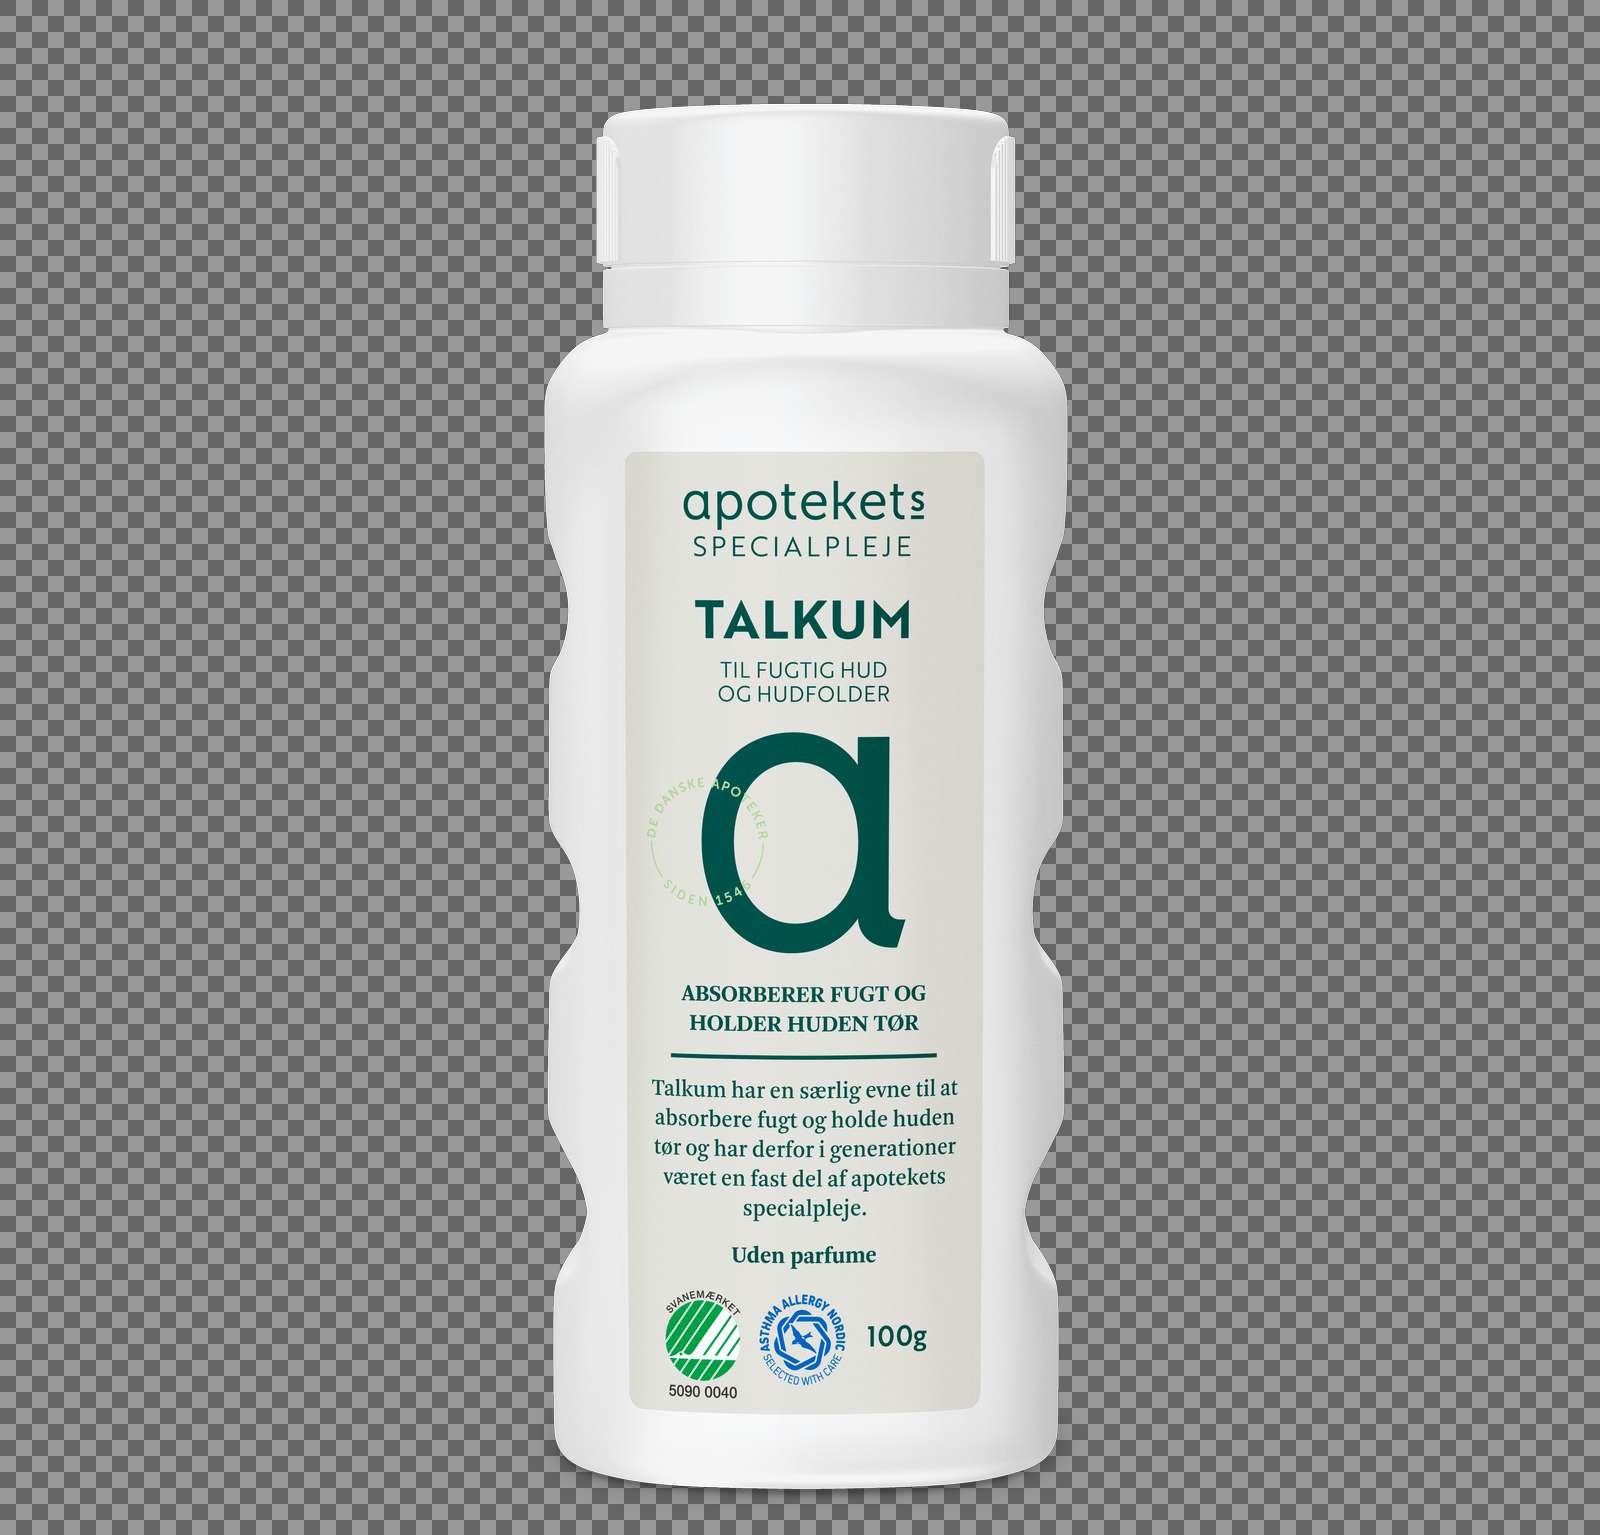 Talkum-100g-apotekets.psd